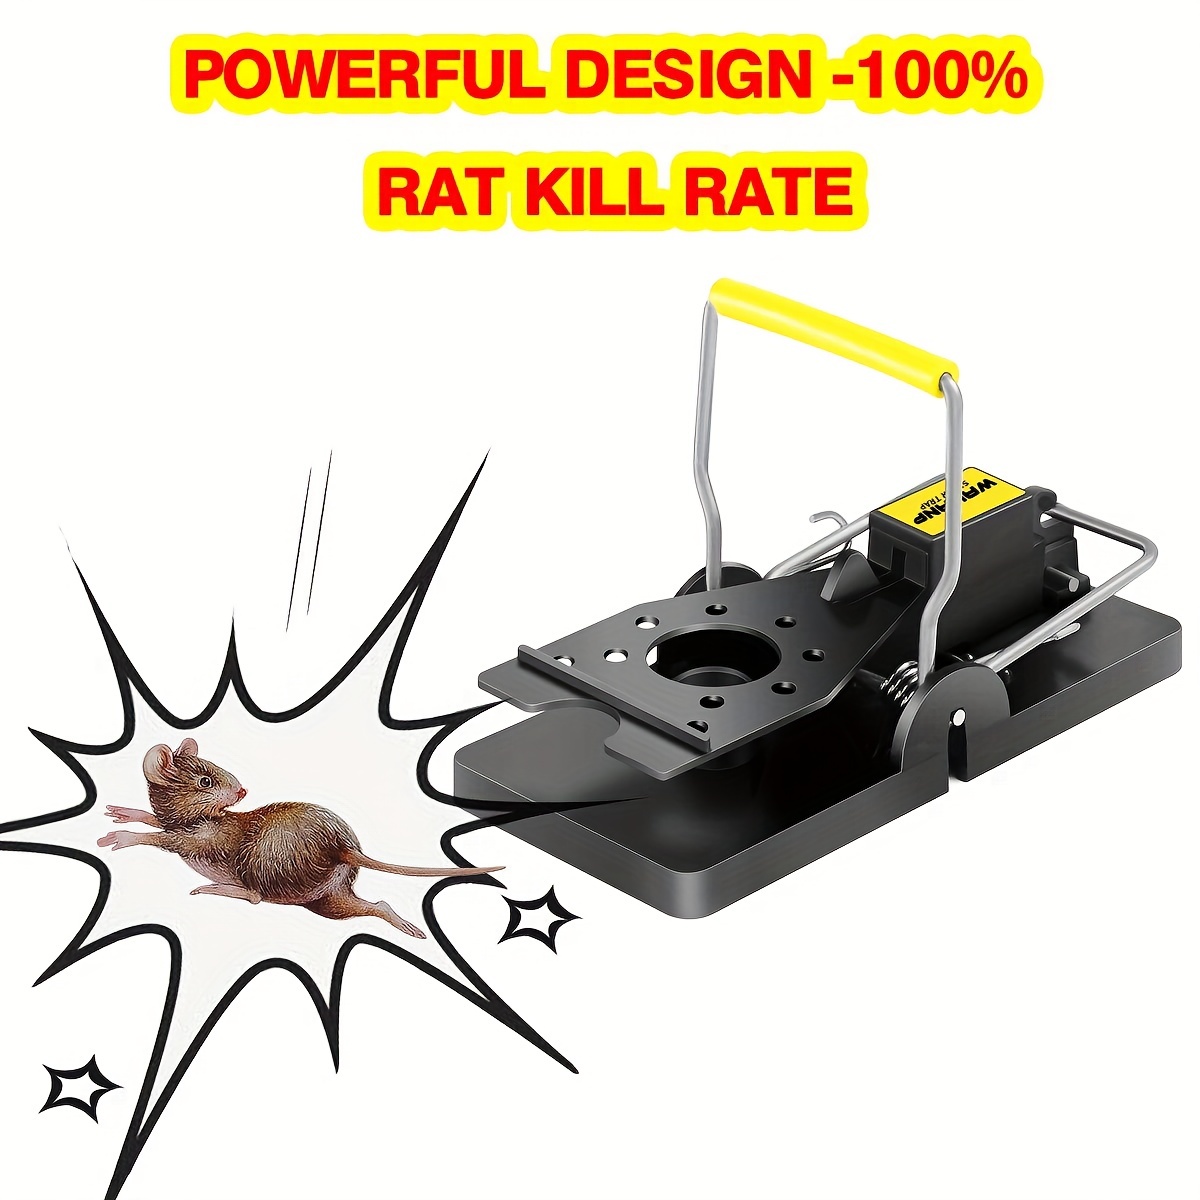 6-Pack Reusable Mouse Traps Rat Trap Rodent Snap Trap Mice Trap Catcher Killer, Size: Small, Black